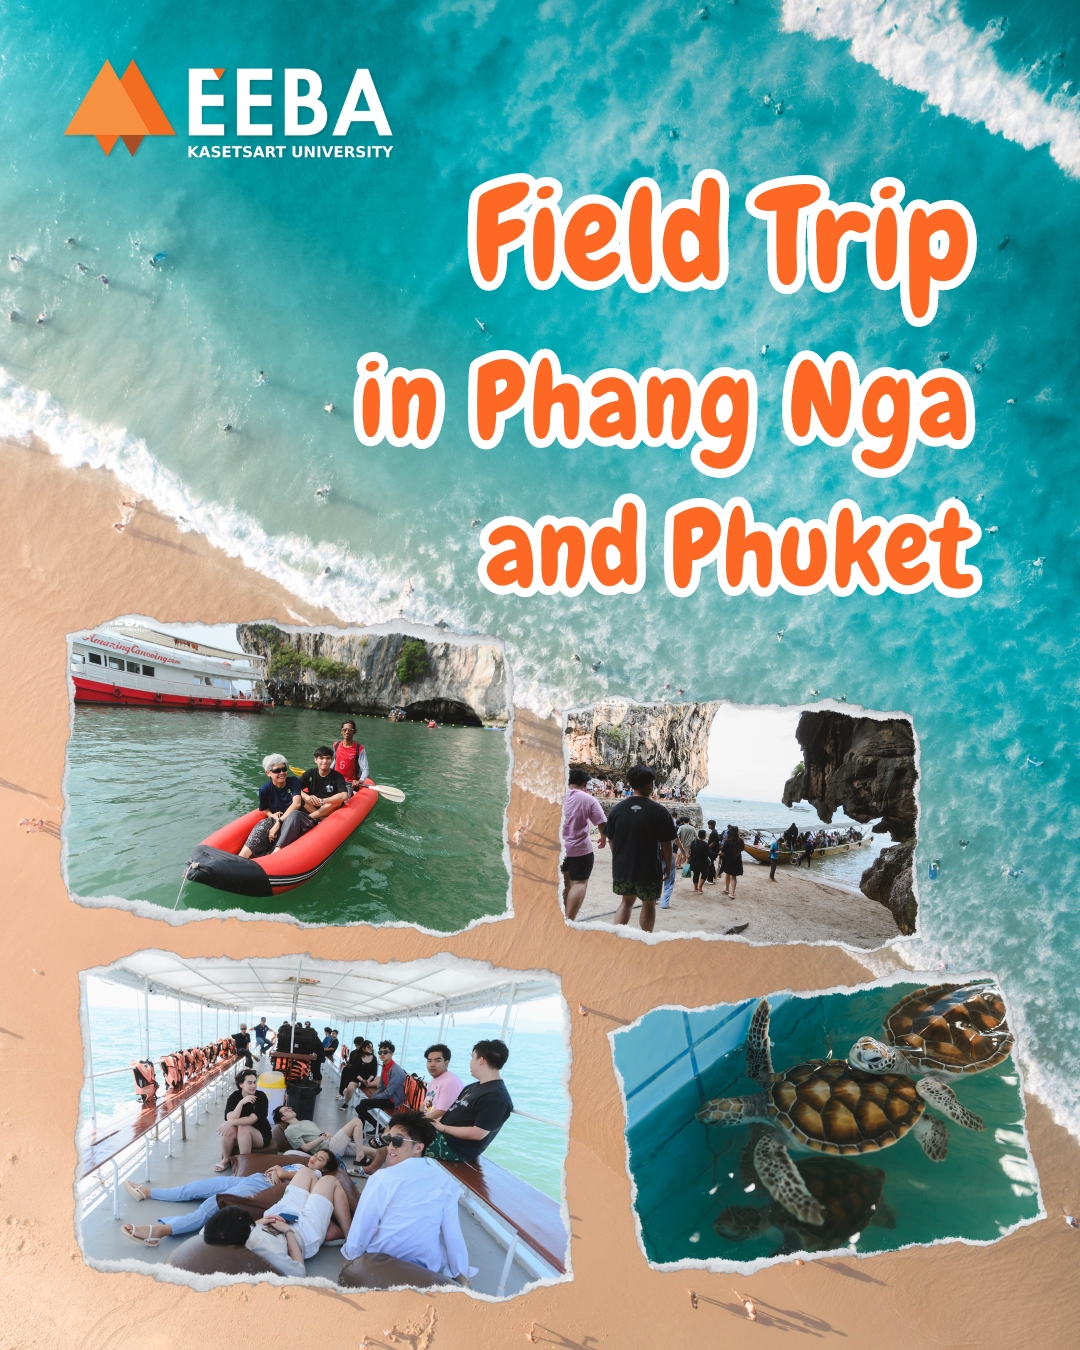 EEBA field trip in Phang Nga and Phuket